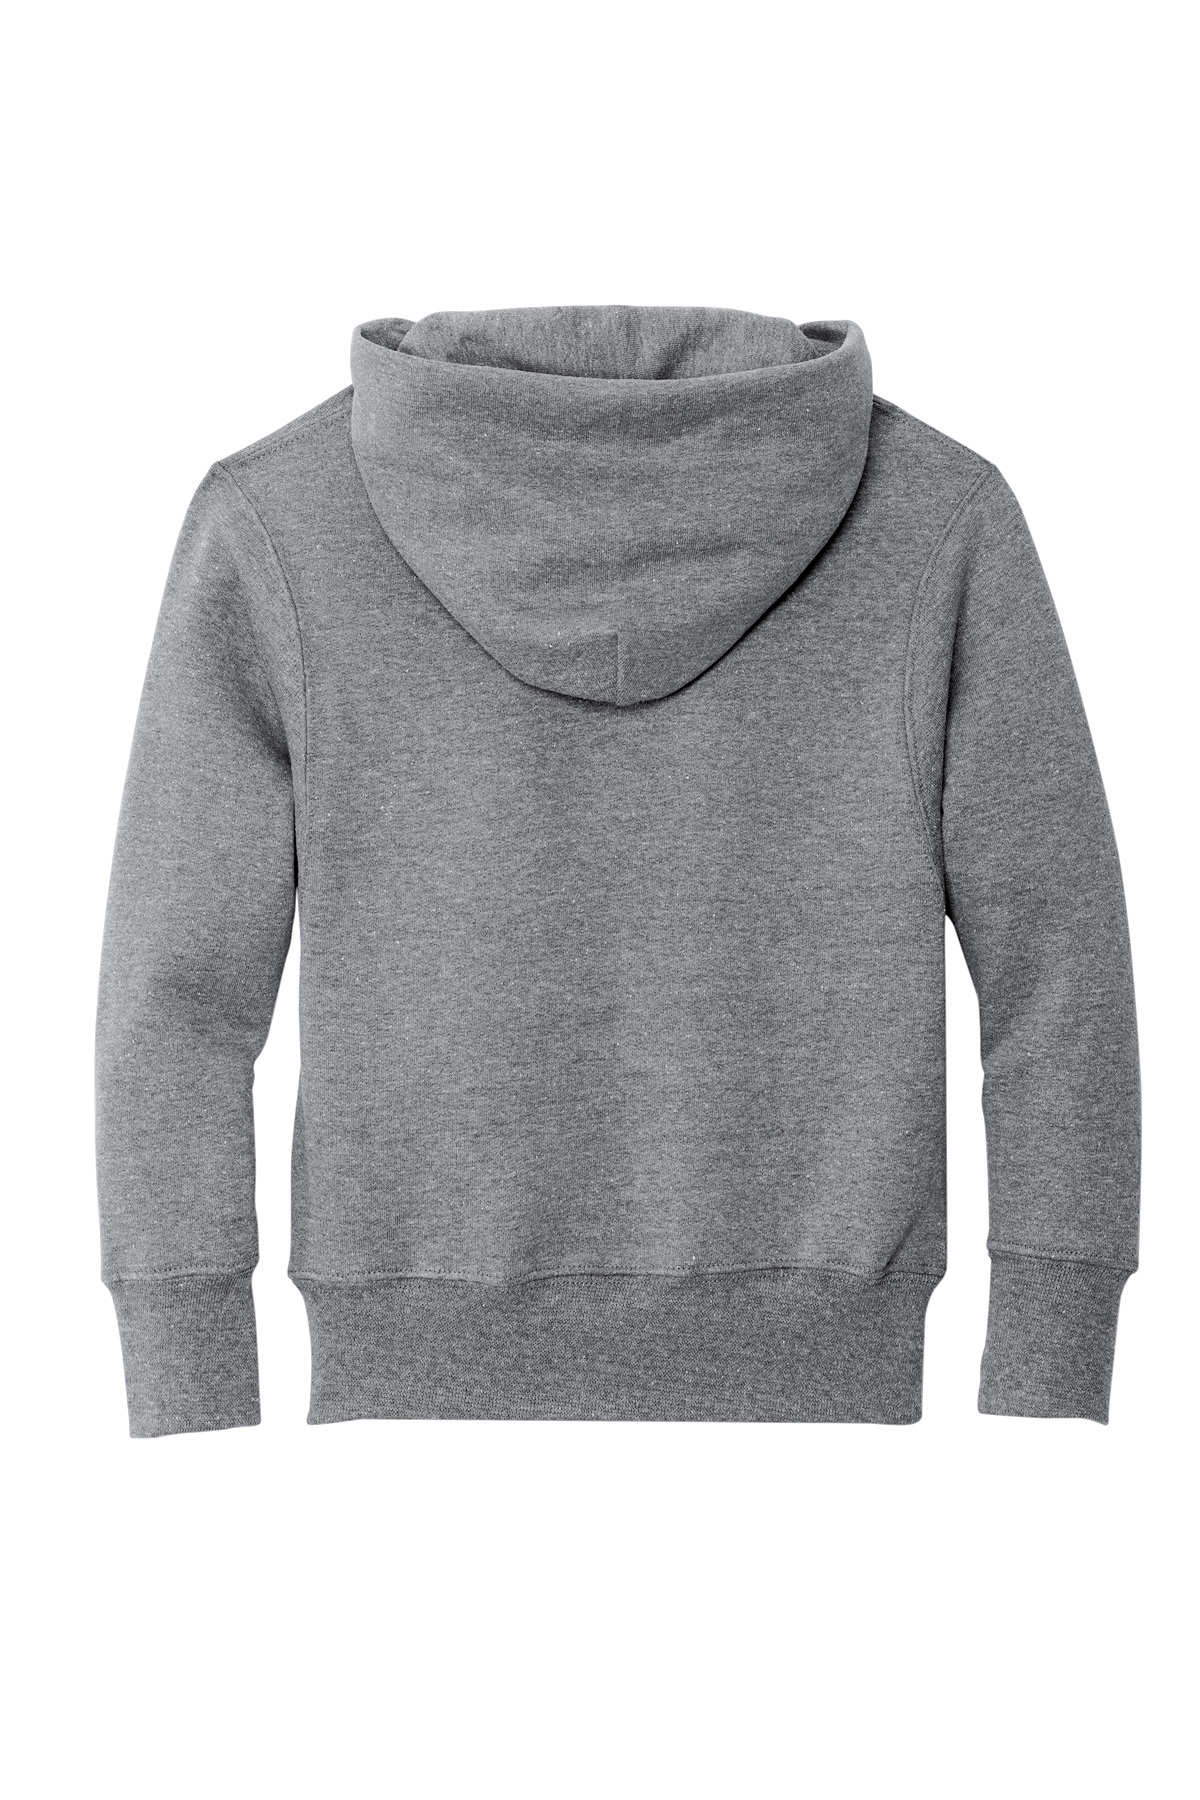 Port & Company Youth Core Fleece Pullover Hooded Sweatshirt | Product |  SanMar